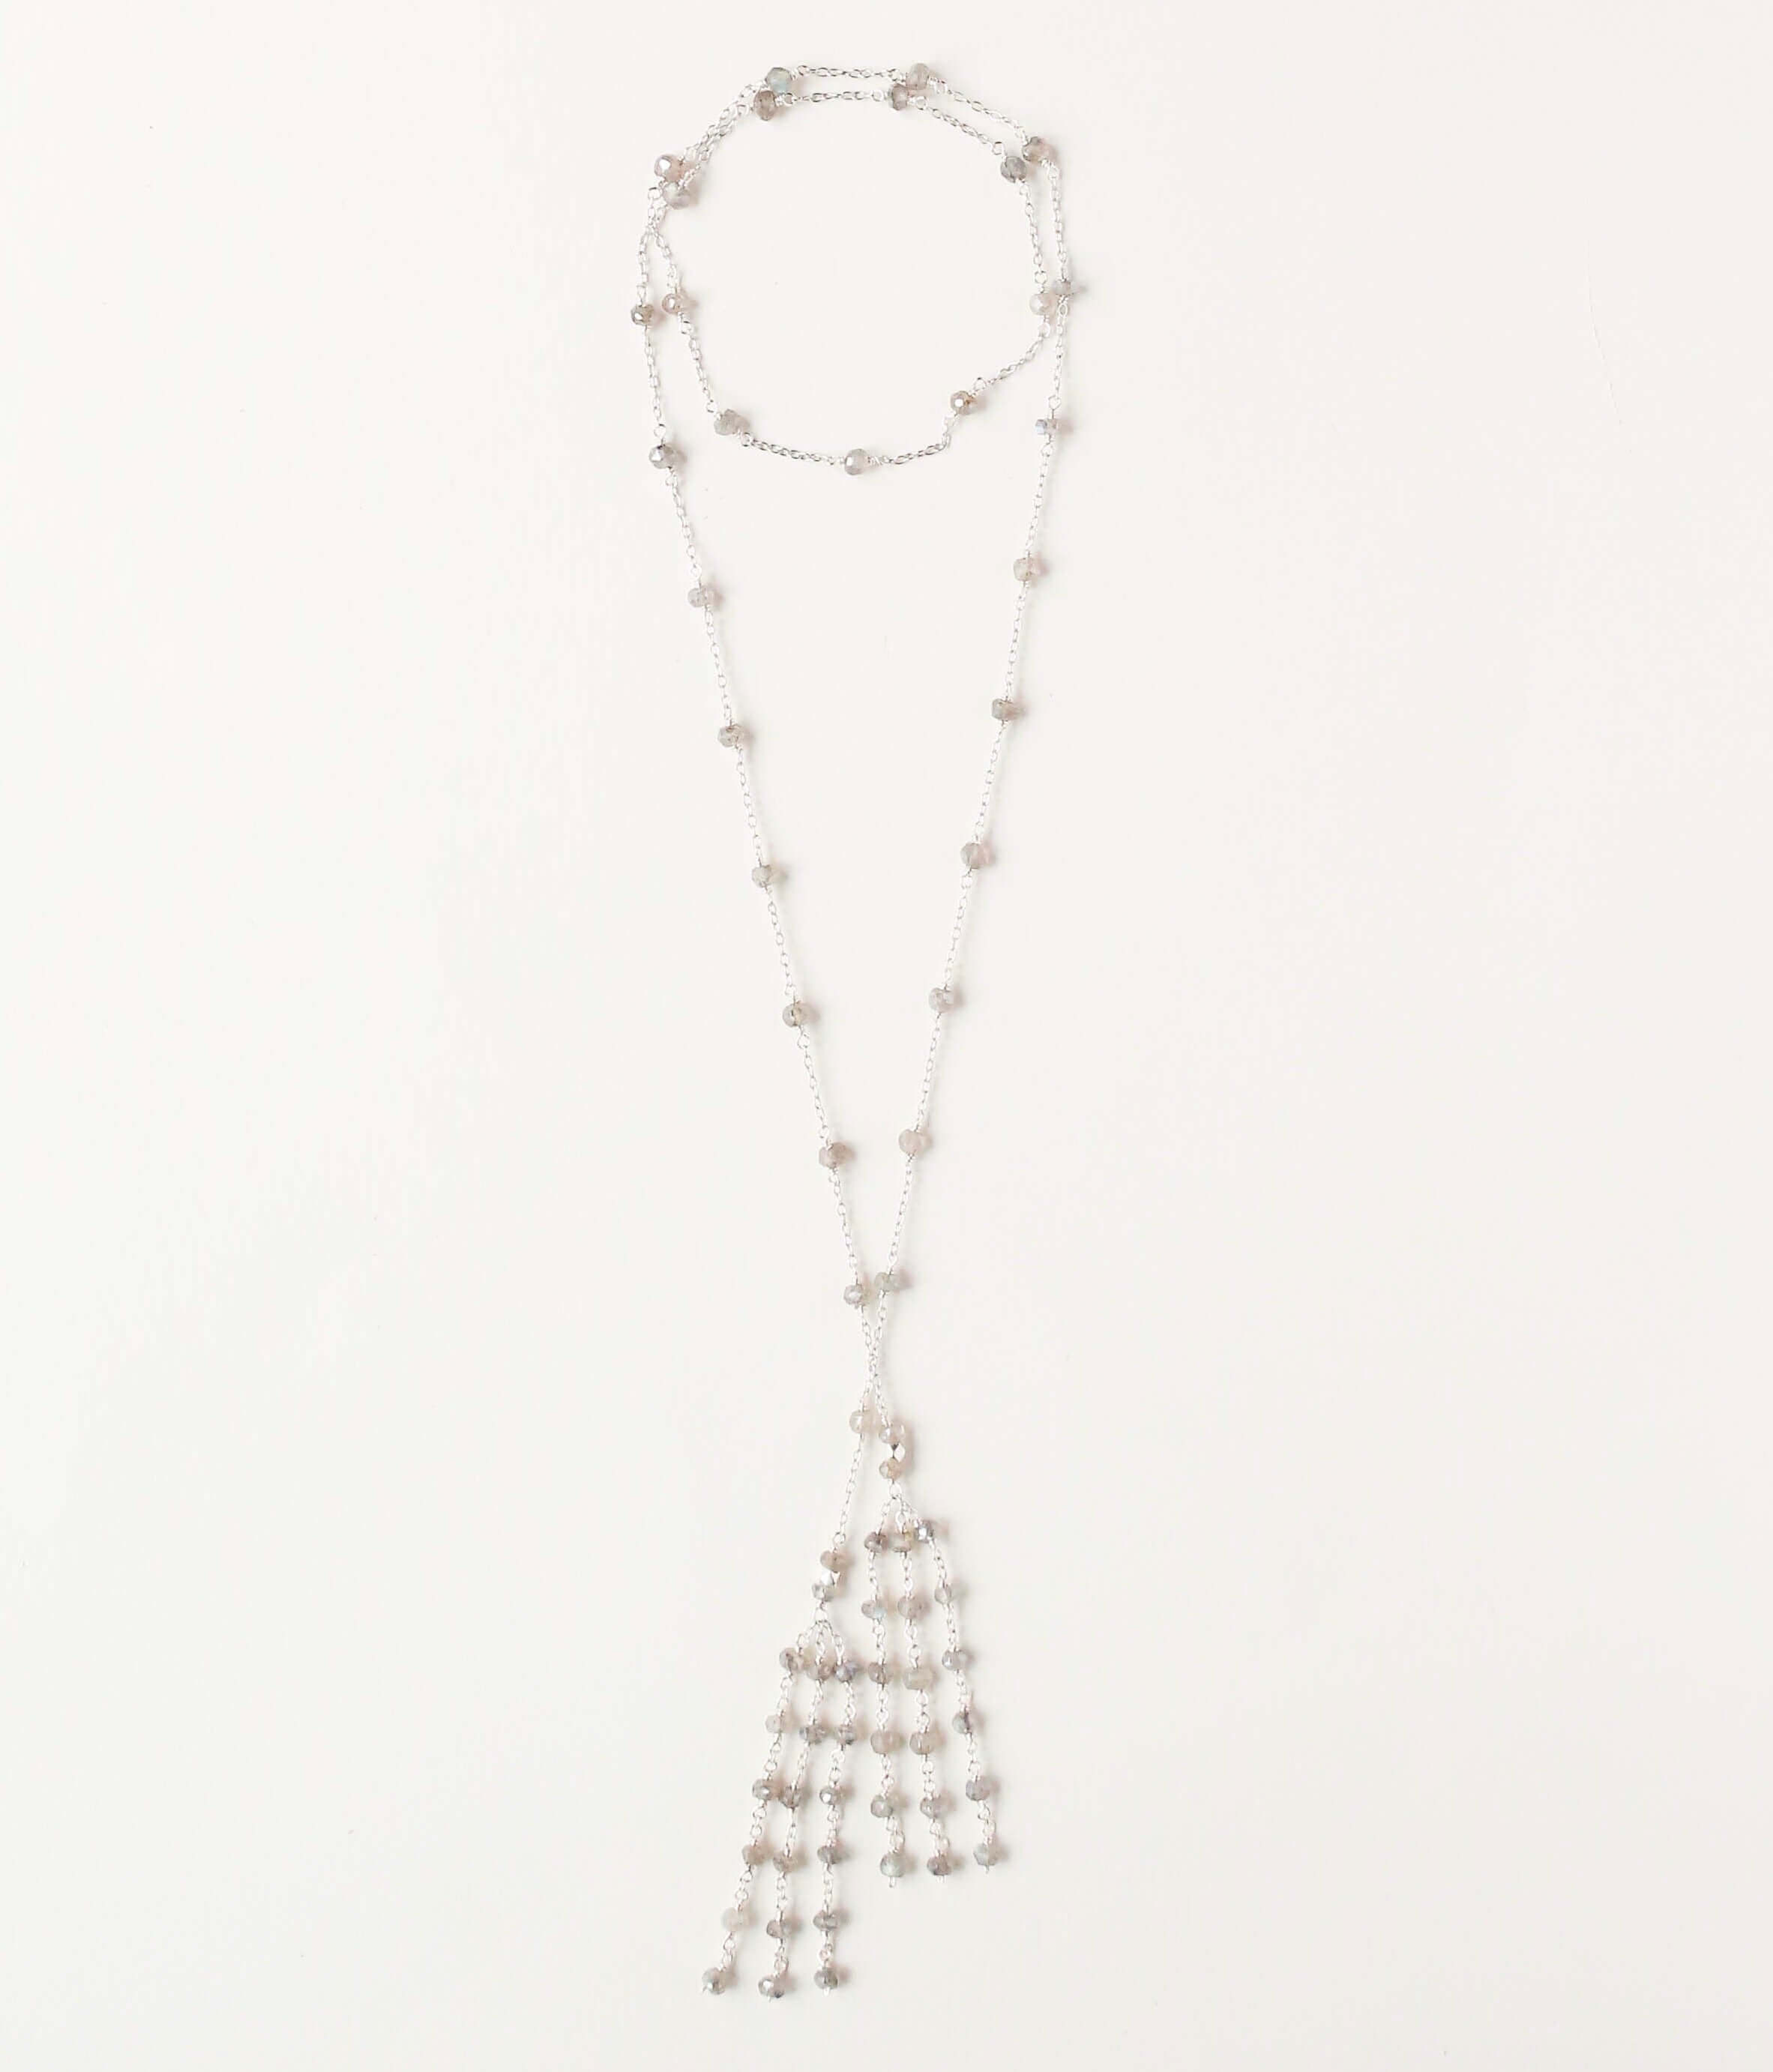 Rhodium plated Labradorite Lariat Necklace with a stunning tassel